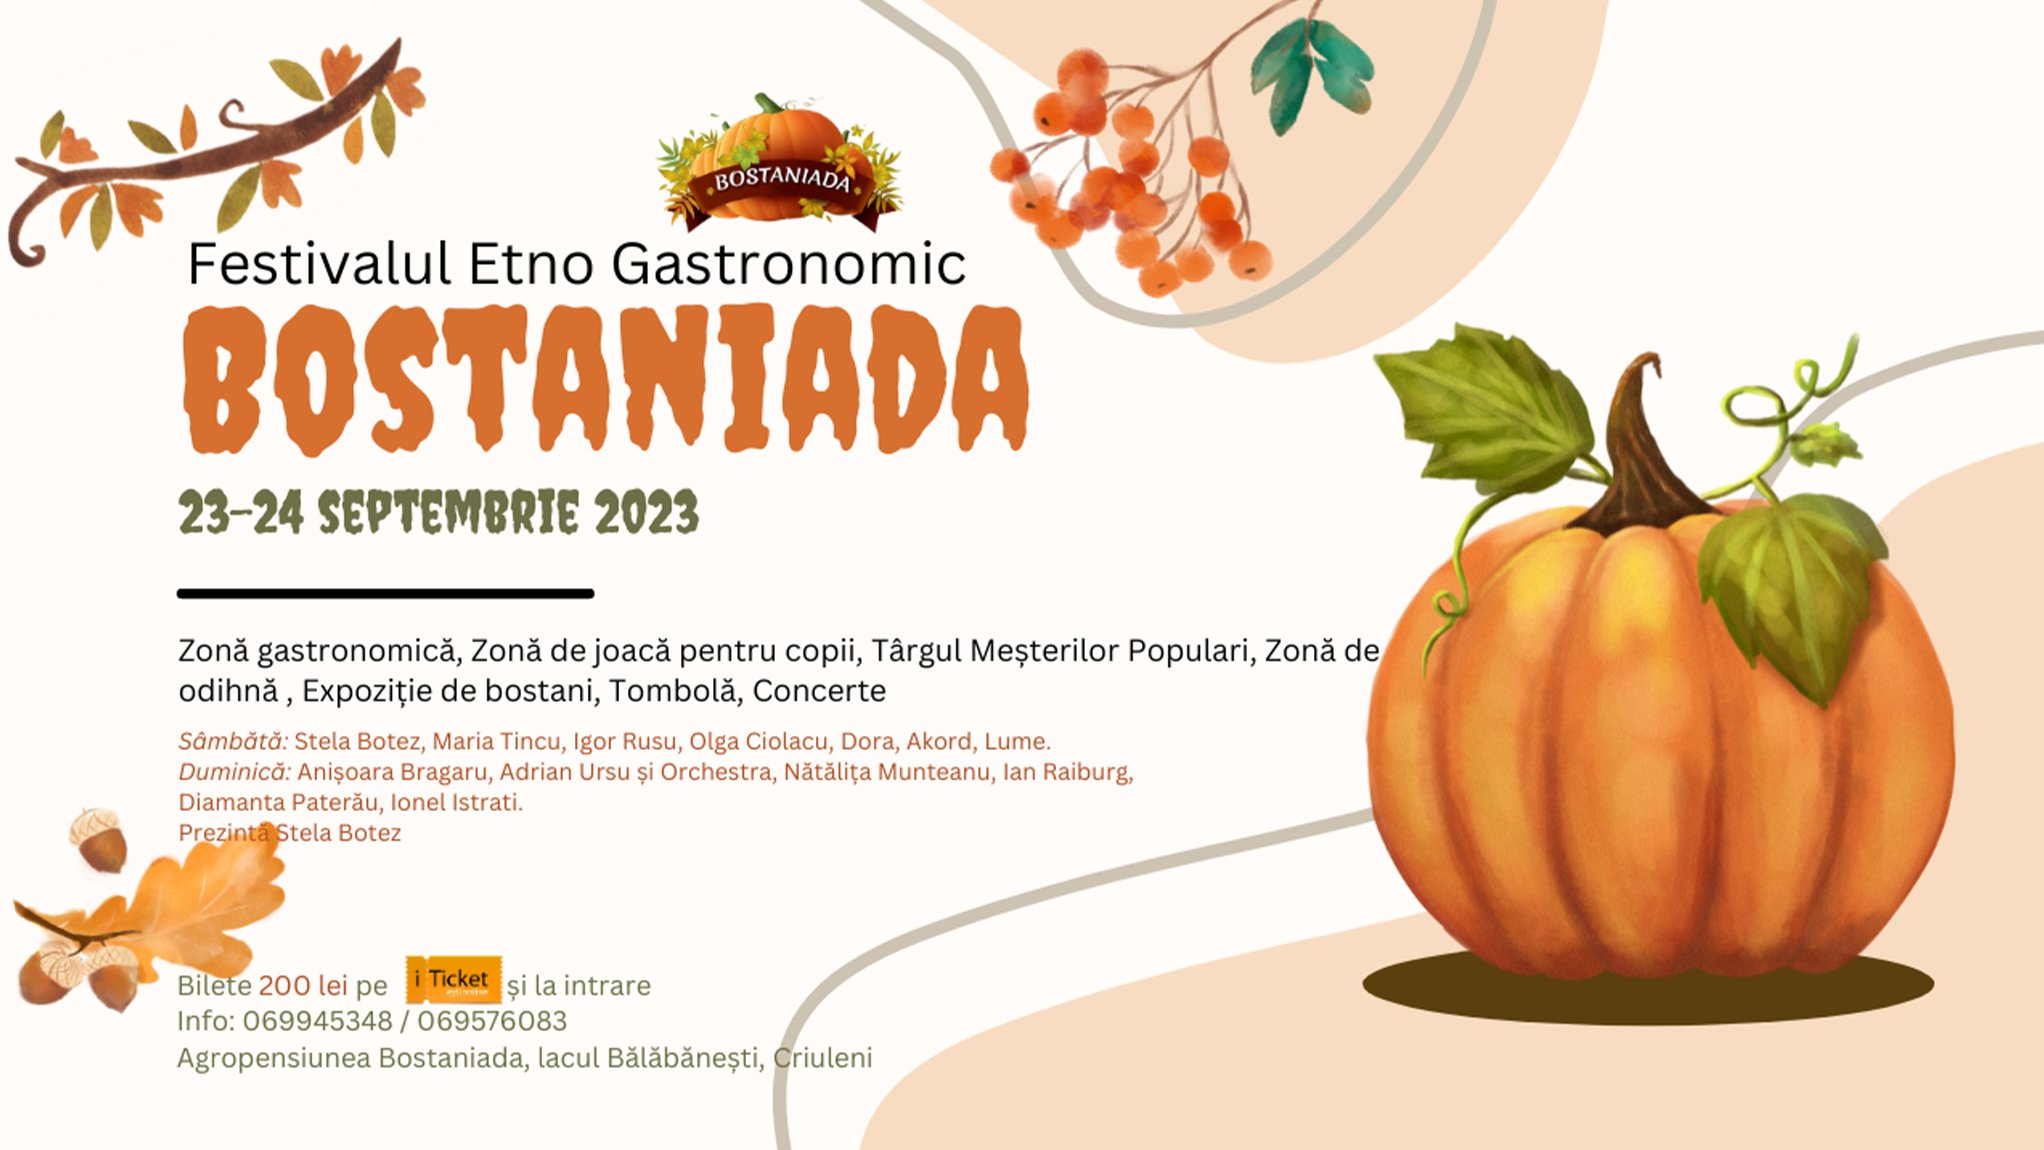 Festivalul Etno Gastronomic Bostaniada 